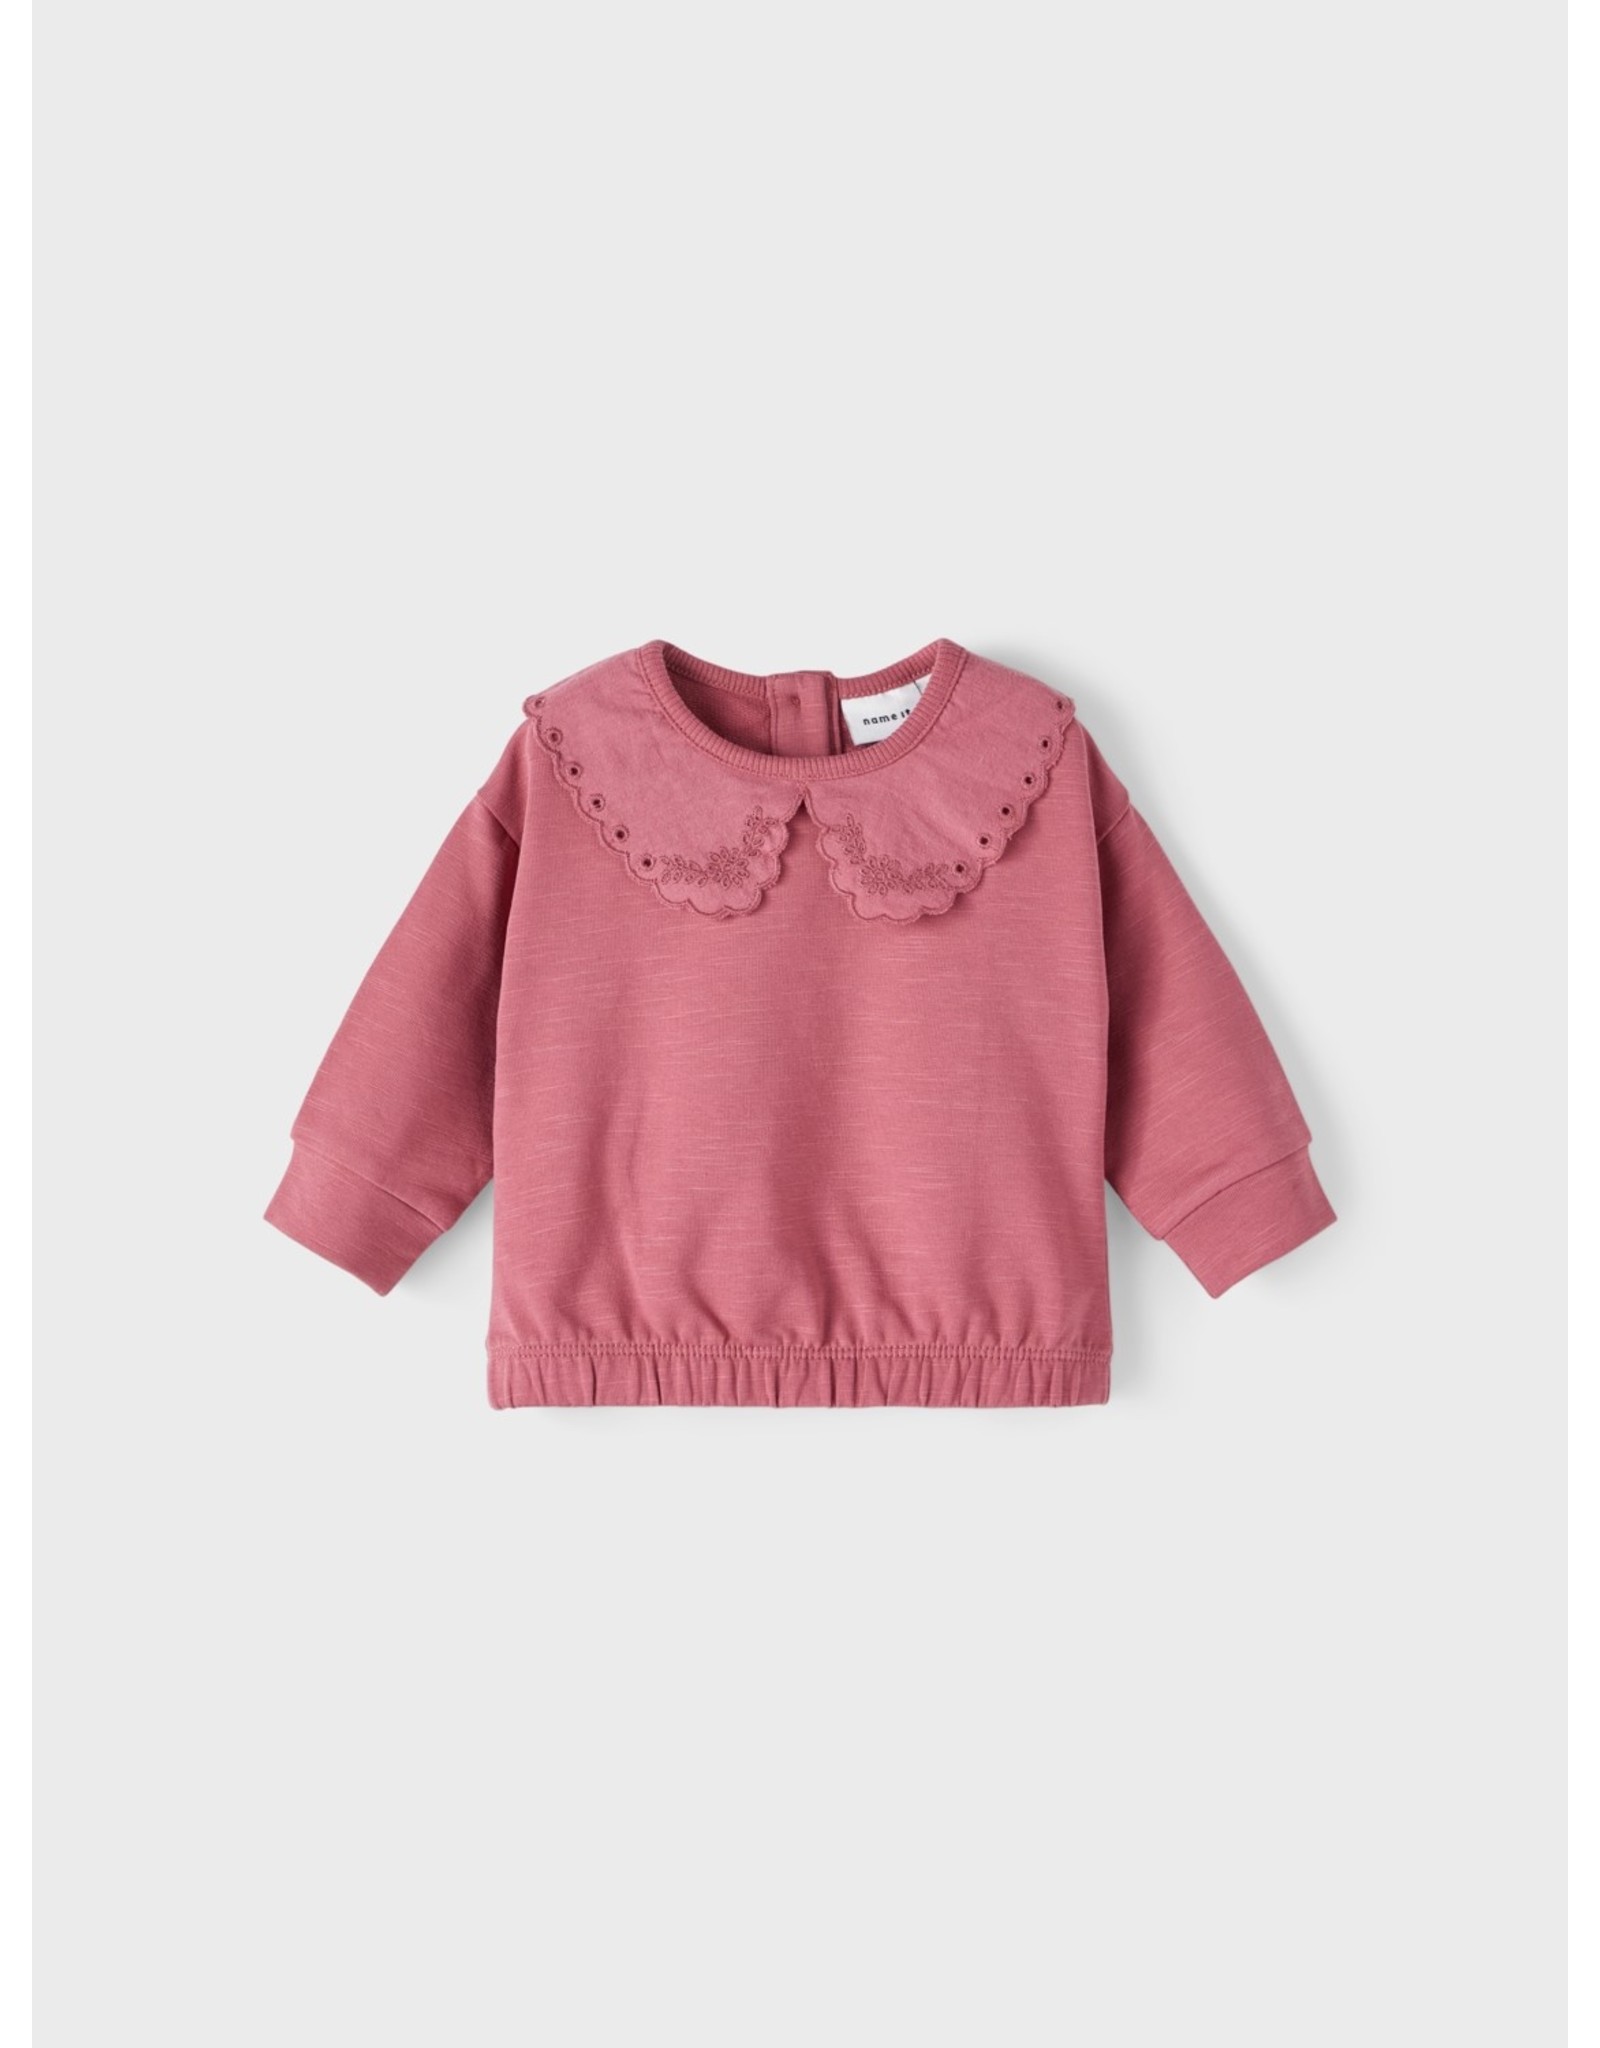 Name it Baby Sweater Rose wine - aan